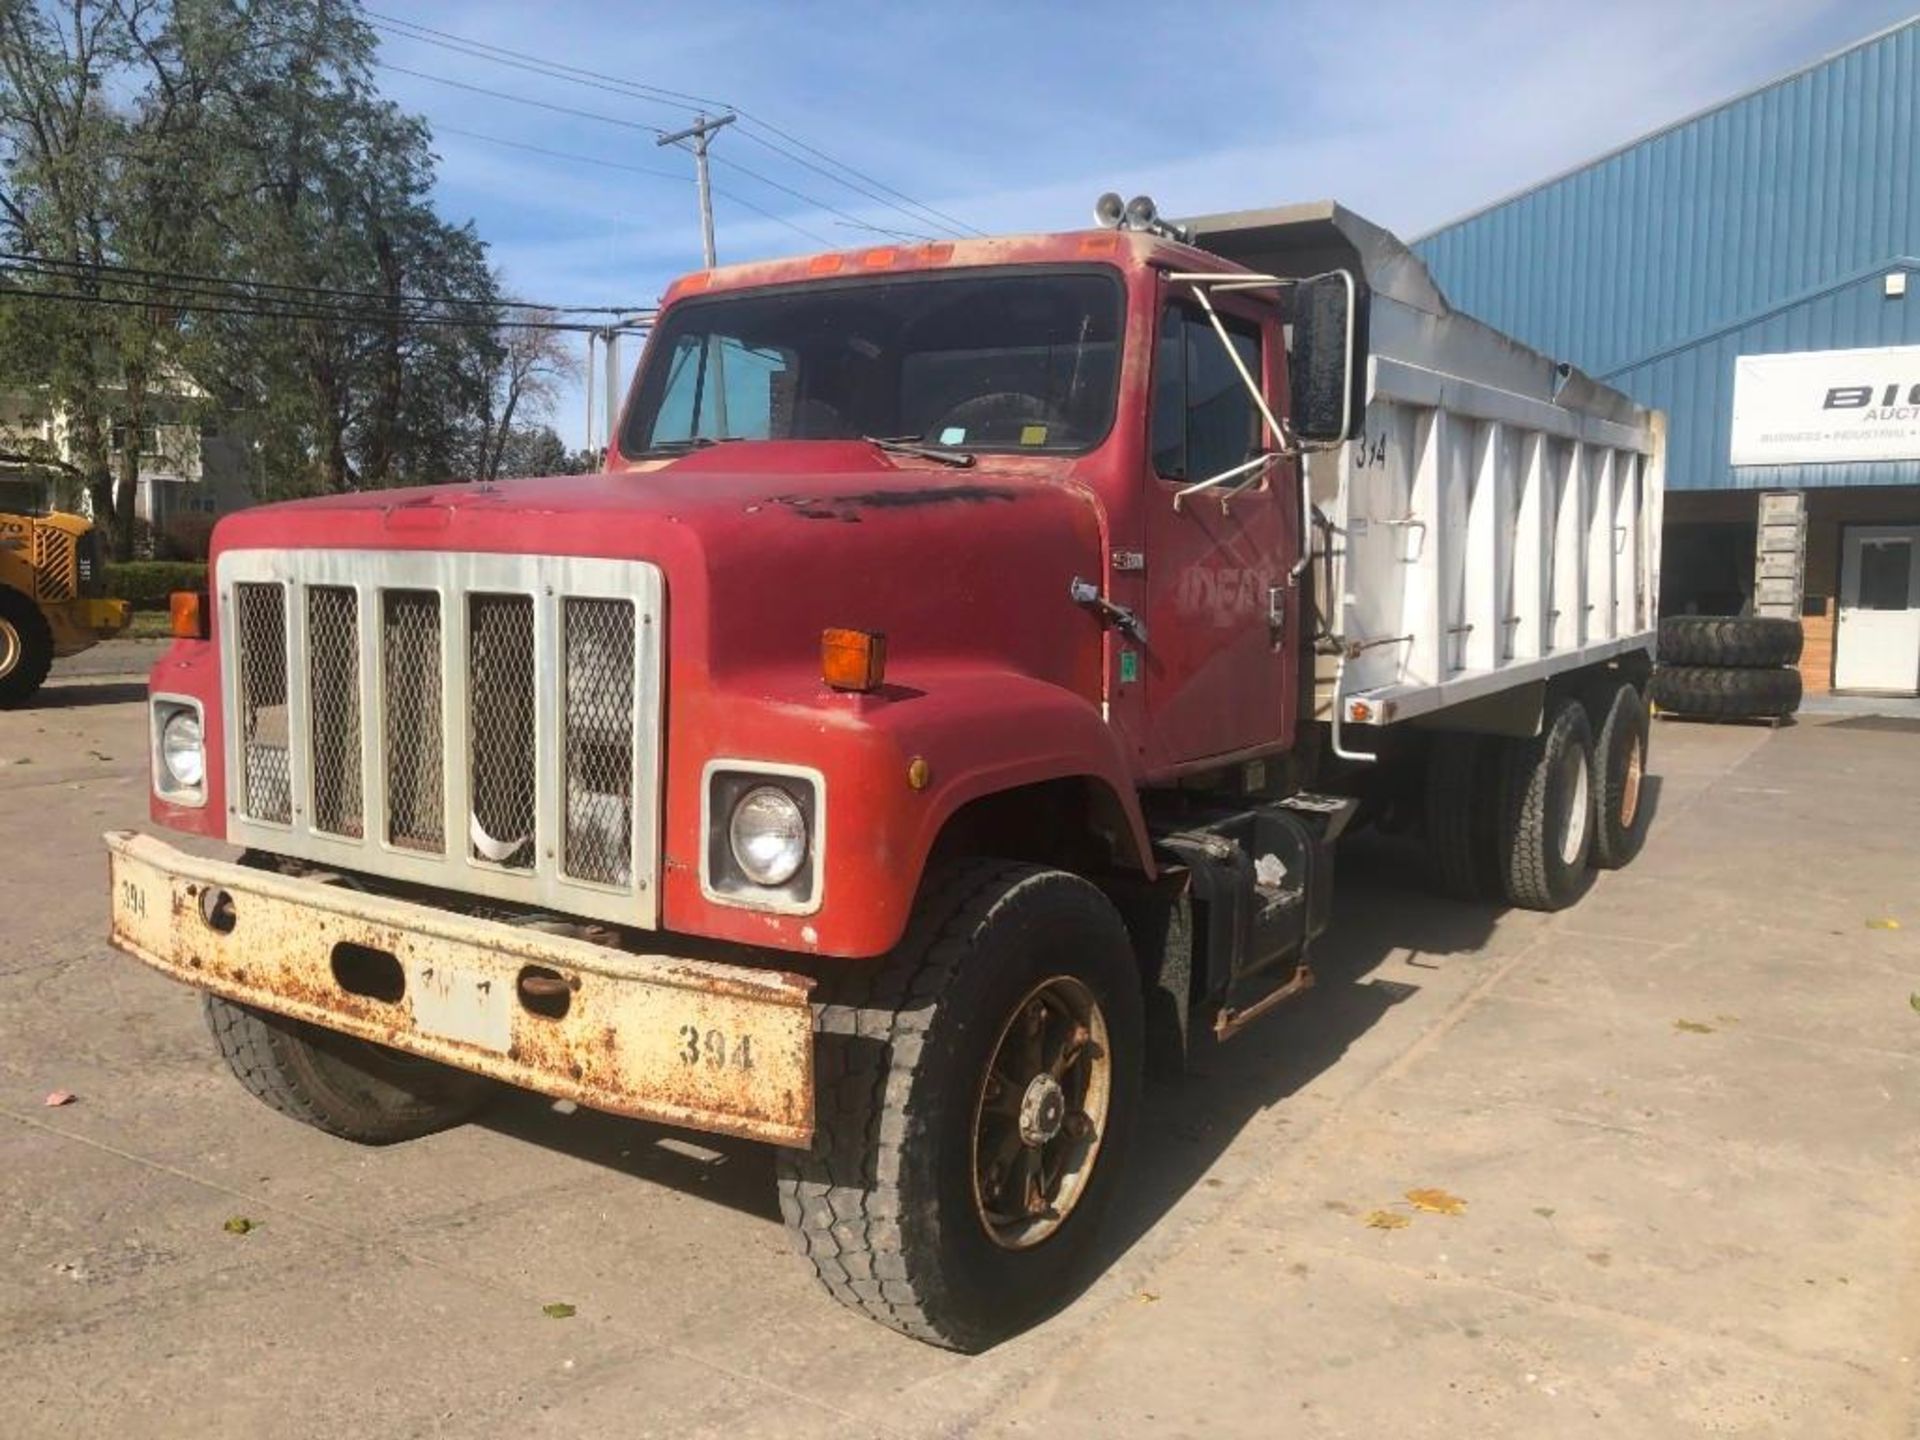 1987 International S2500 Dump Truck, Model F-2554, VIN #1HTZNDBR2HH485771, 37594 Miles, 16' x 8' x - Image 9 of 21